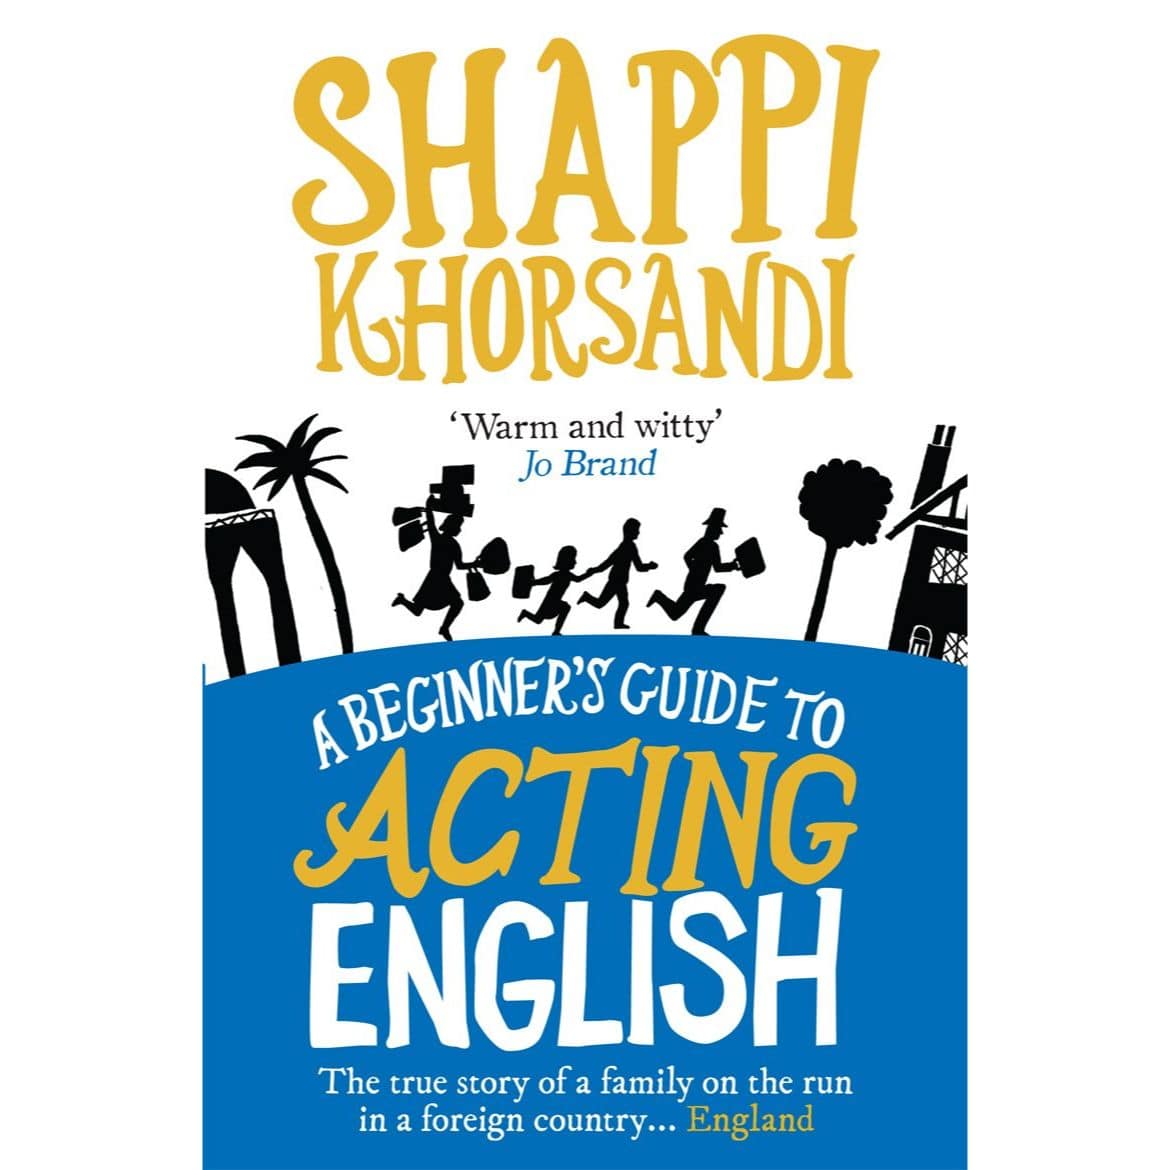 Shappi Khorsandi: A Beginner’s Guide to Acting English